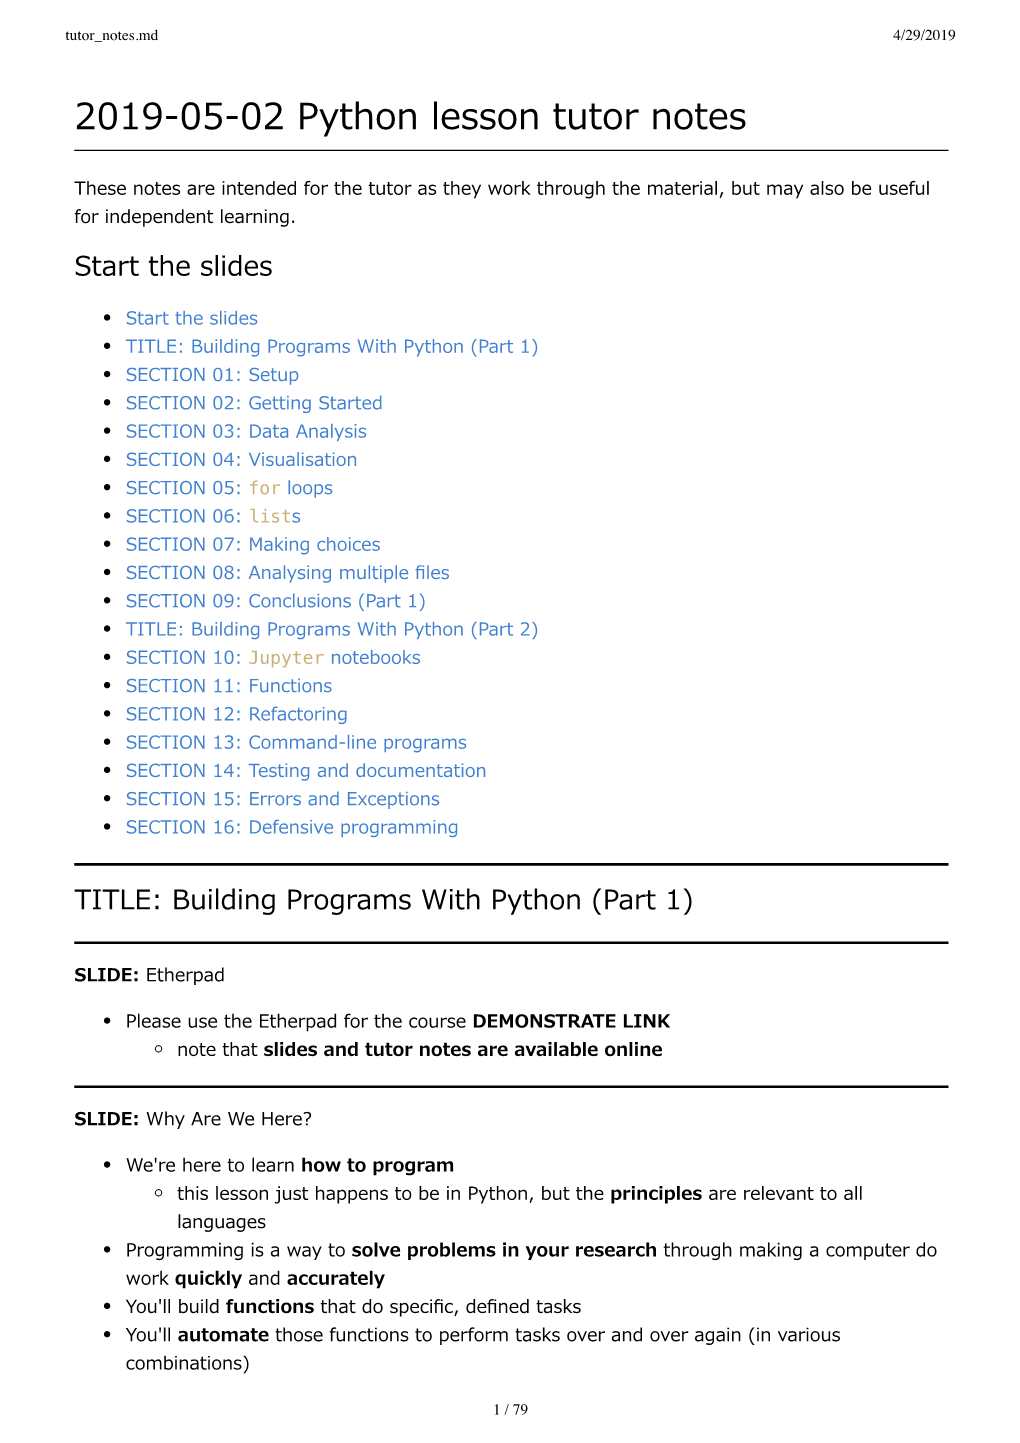 2019‒05‒02 Python Lesson Tutor Notes